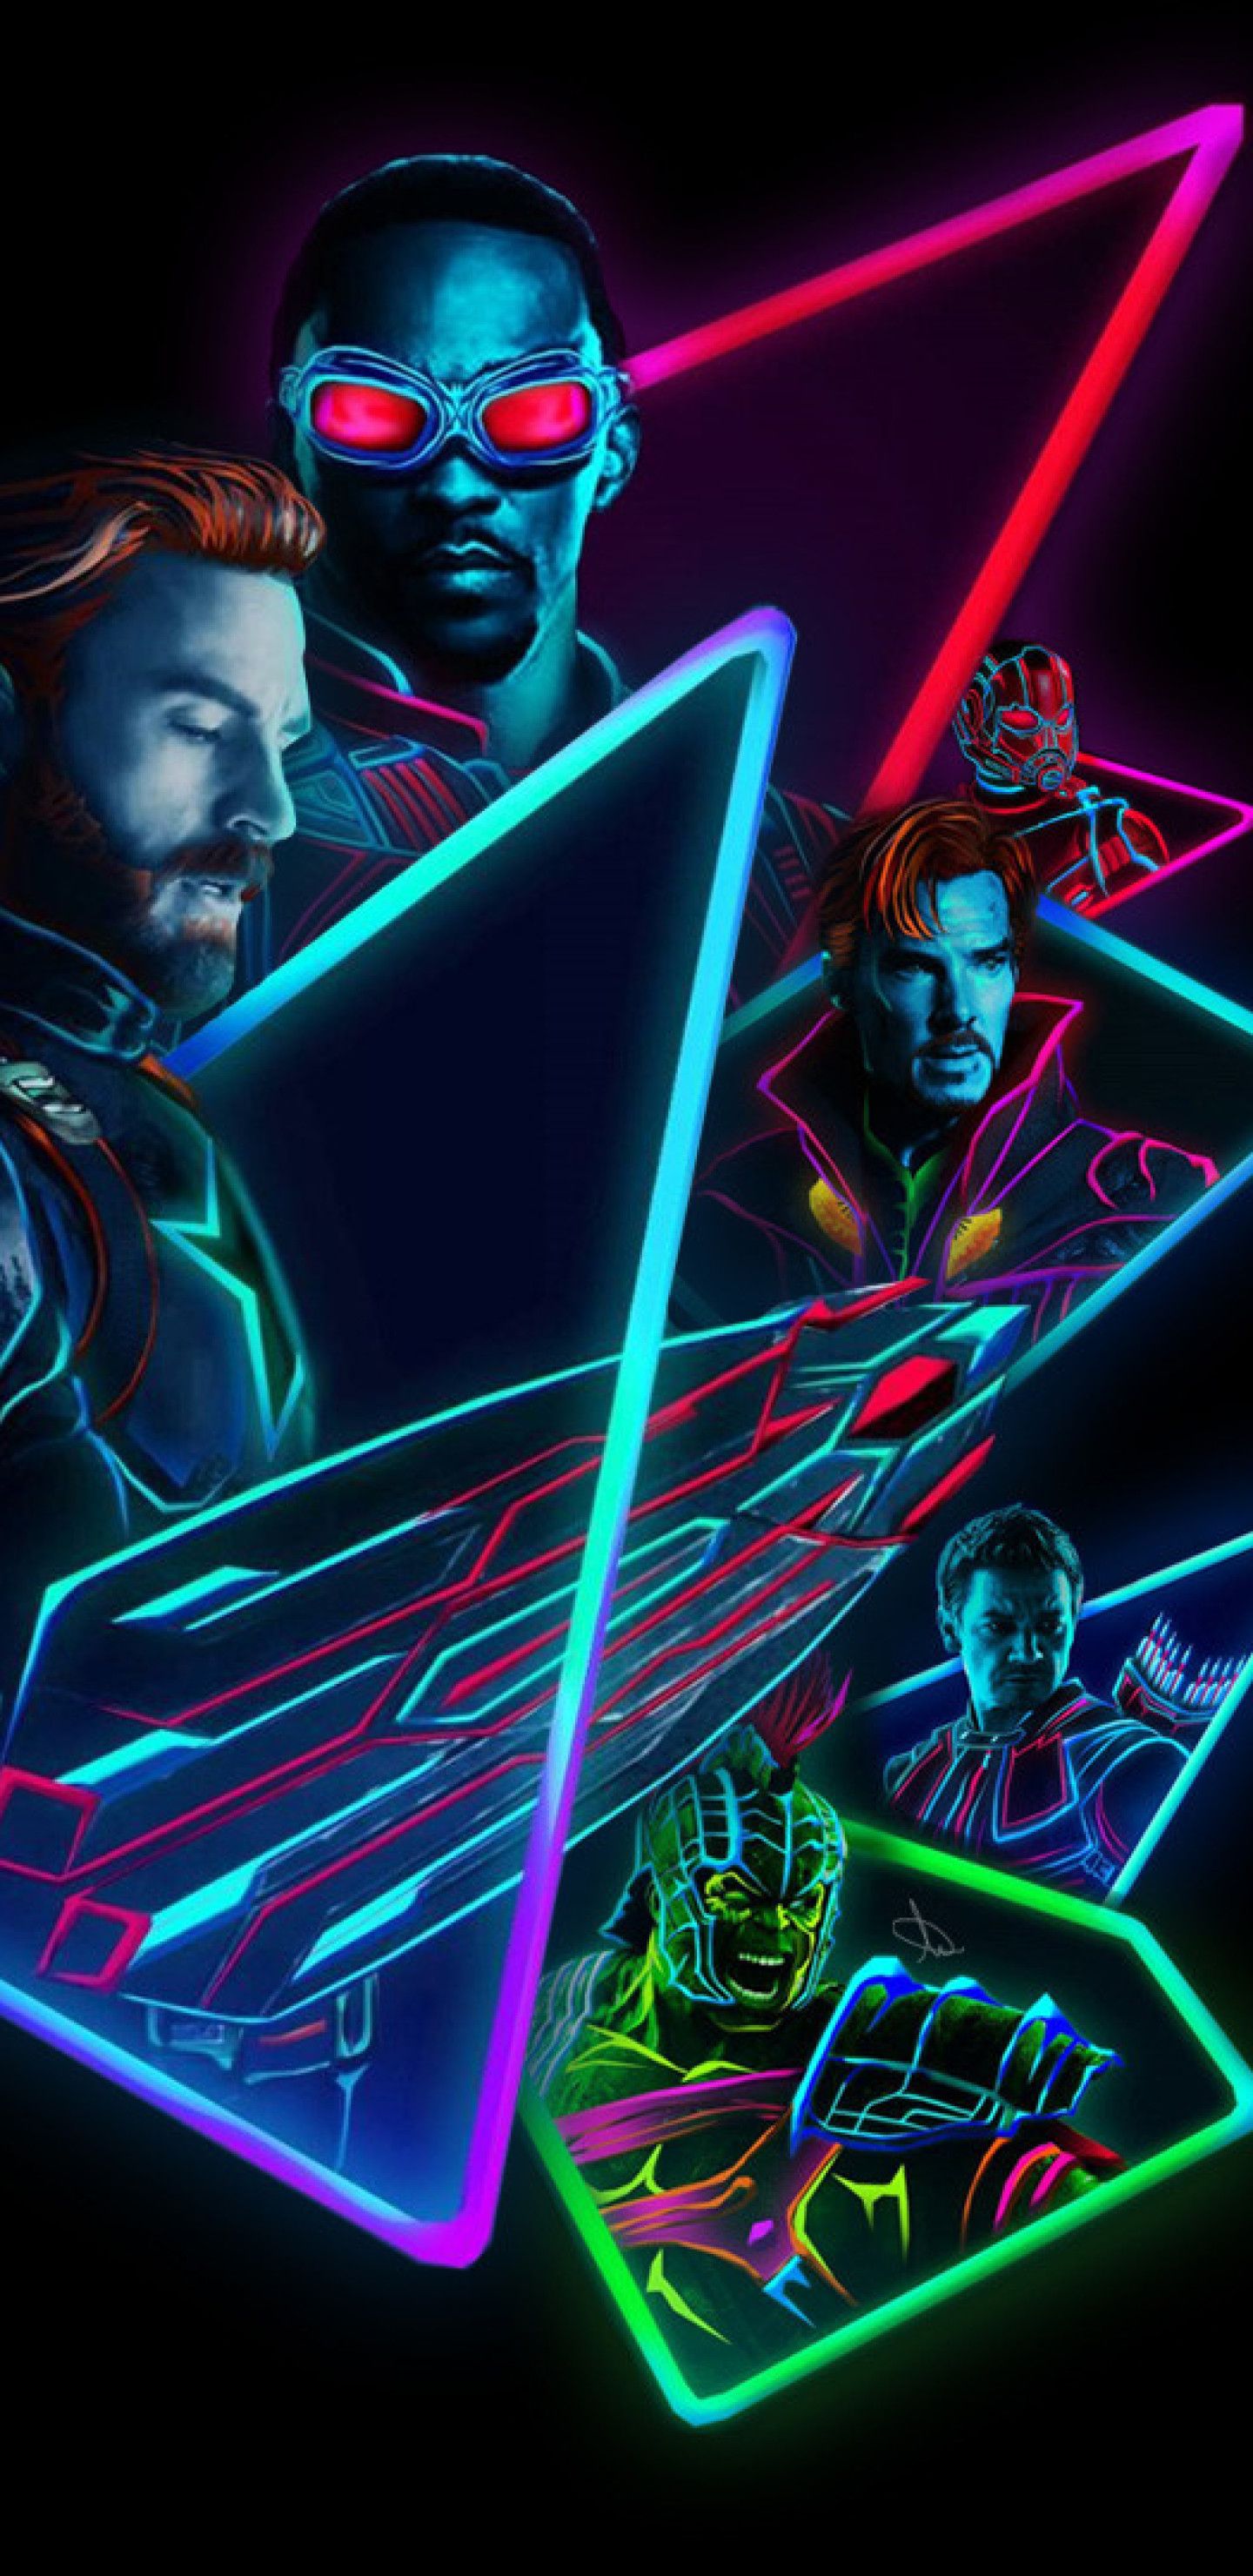 Avengers Infinity War 2018 80S Style Artwork Samsung